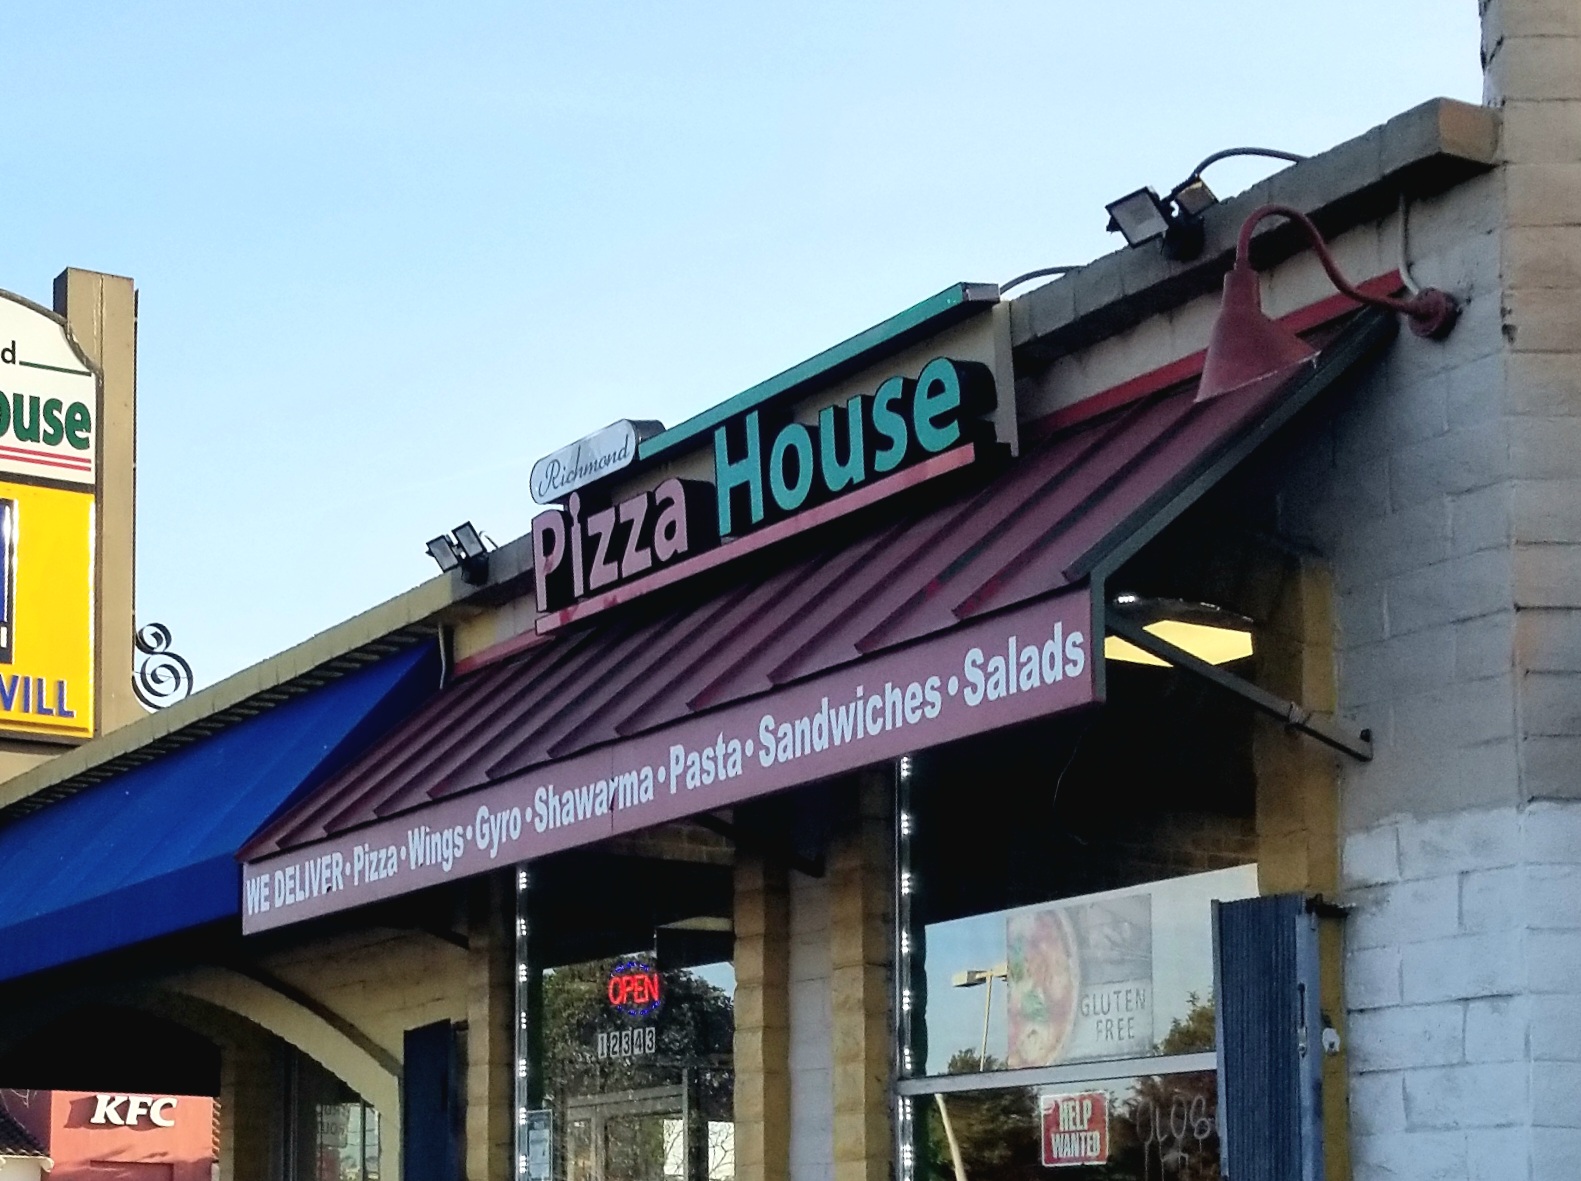 RICHMOND PIZZA HOUSE